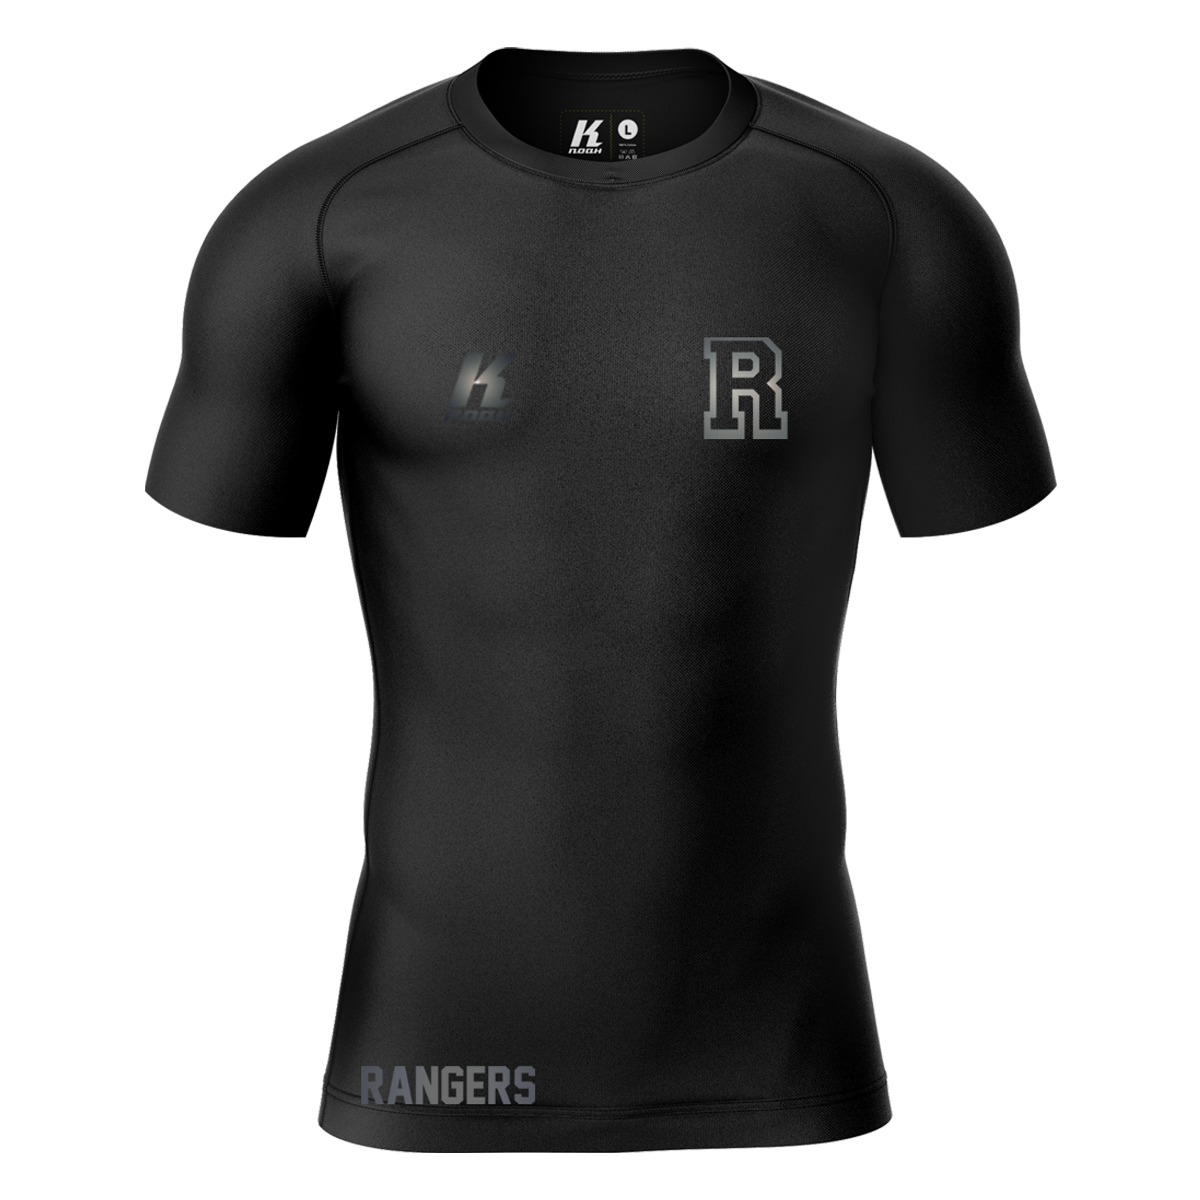 Rangers "Blackline" K.Tech Compression Shortsleeve Shirt